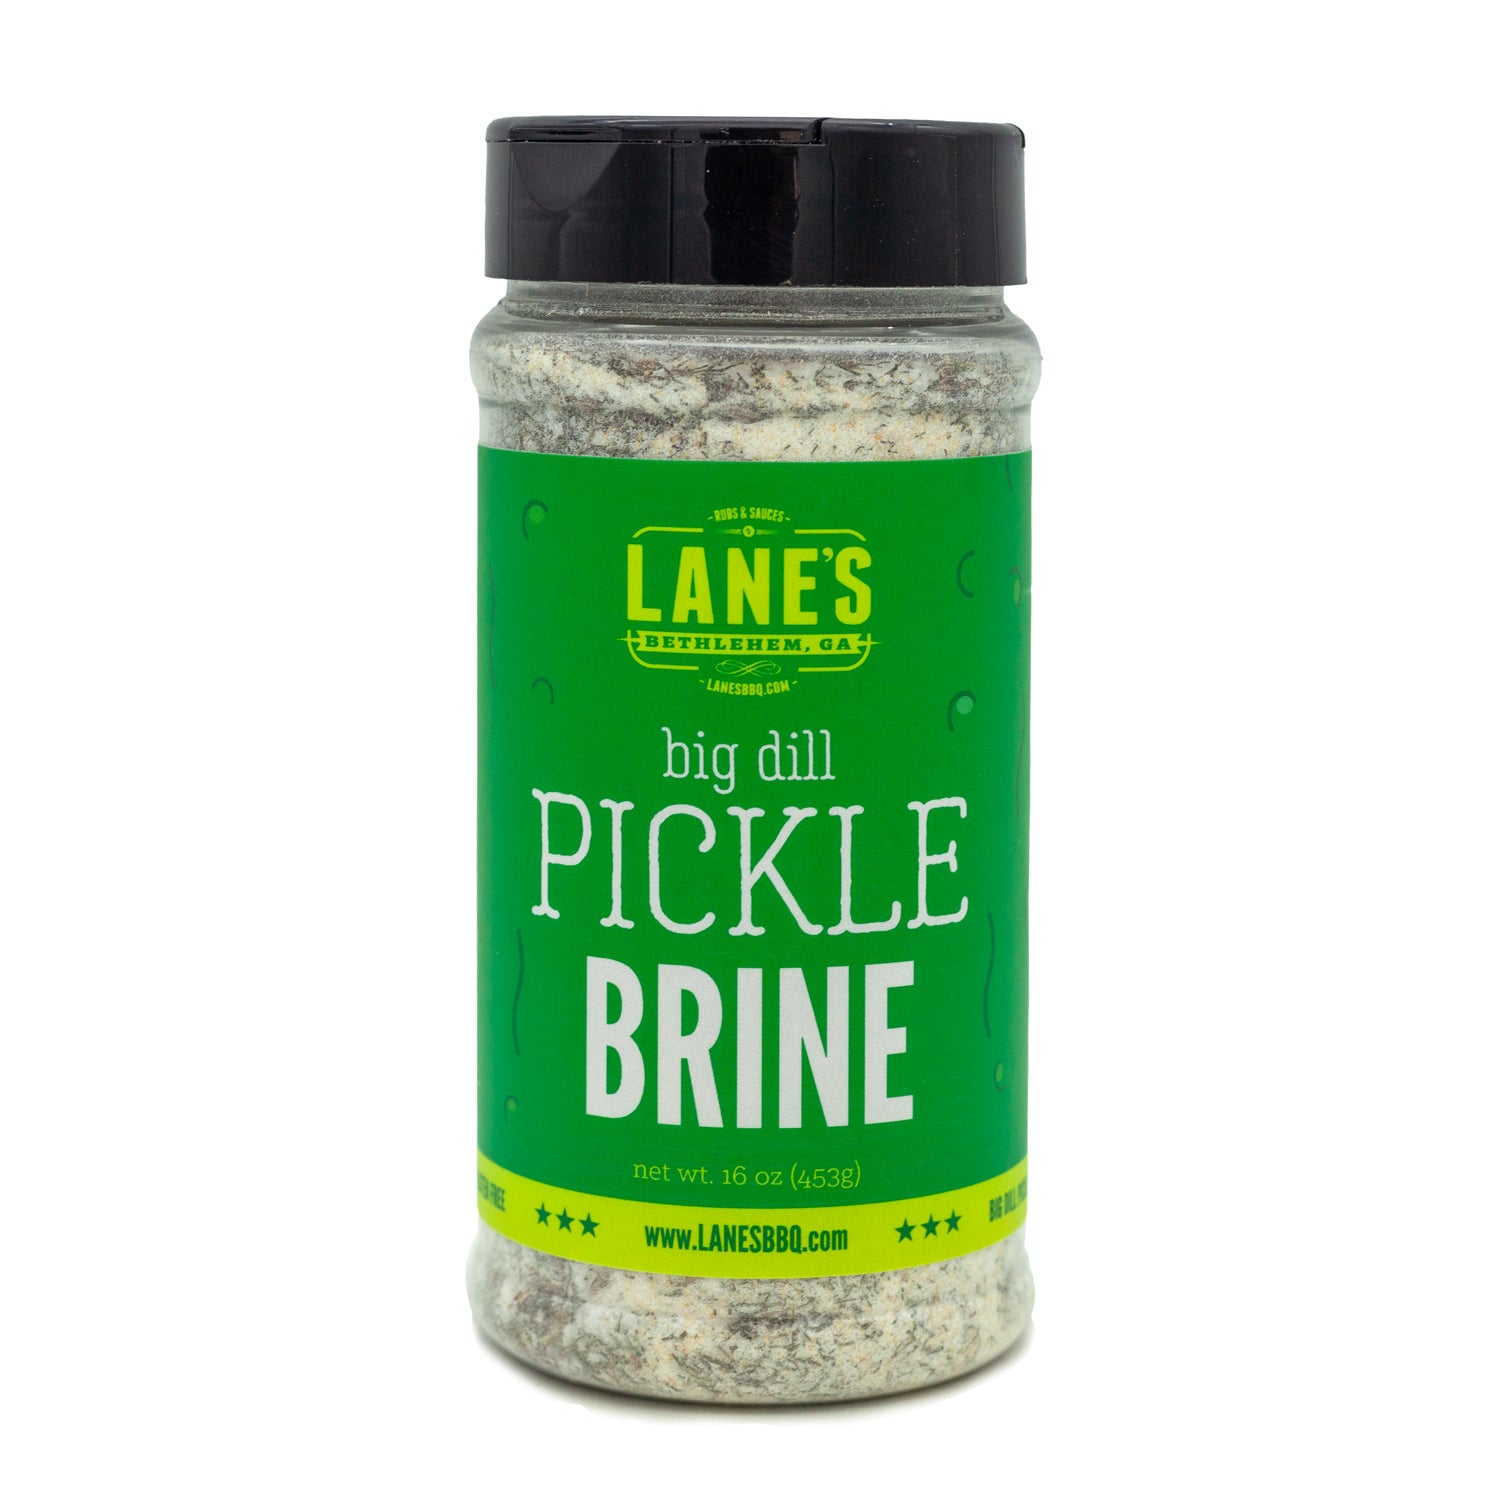 Lane's BBQ Brine Bundle - 3 Pack